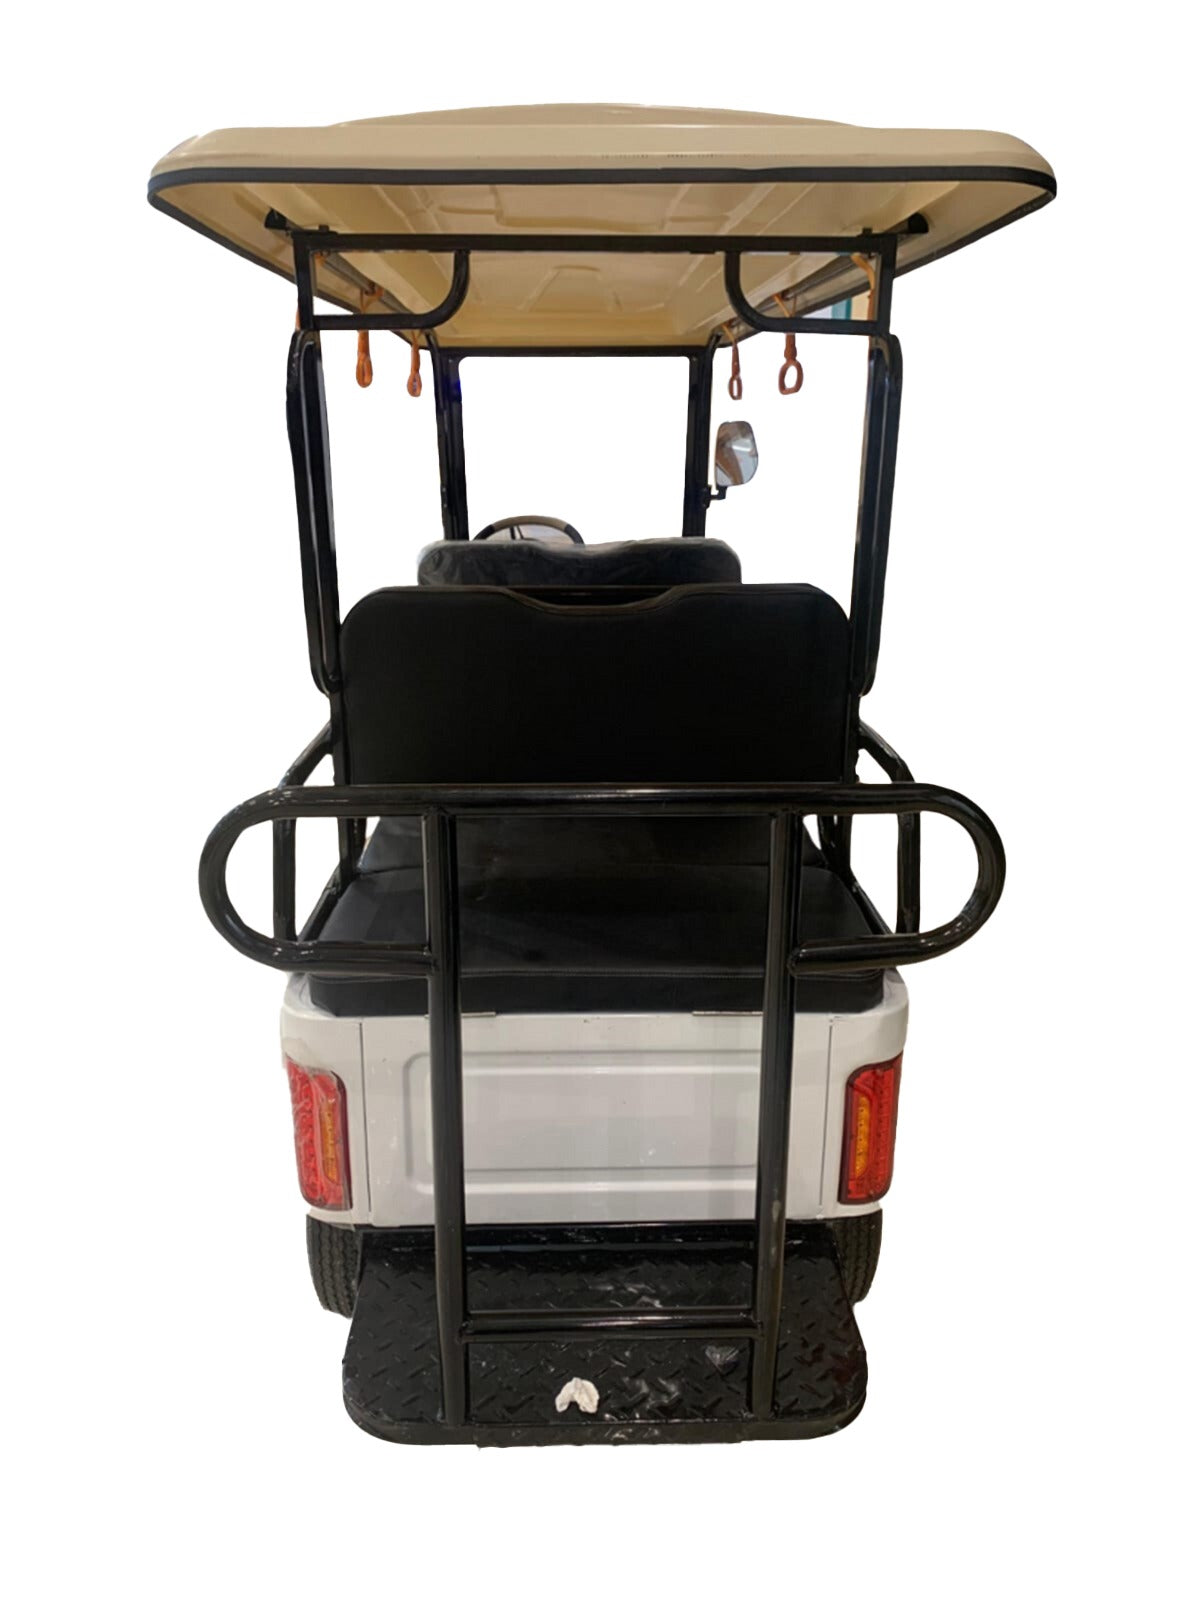 Megawheels Sport Eco Electric Golf Cart 8 seater